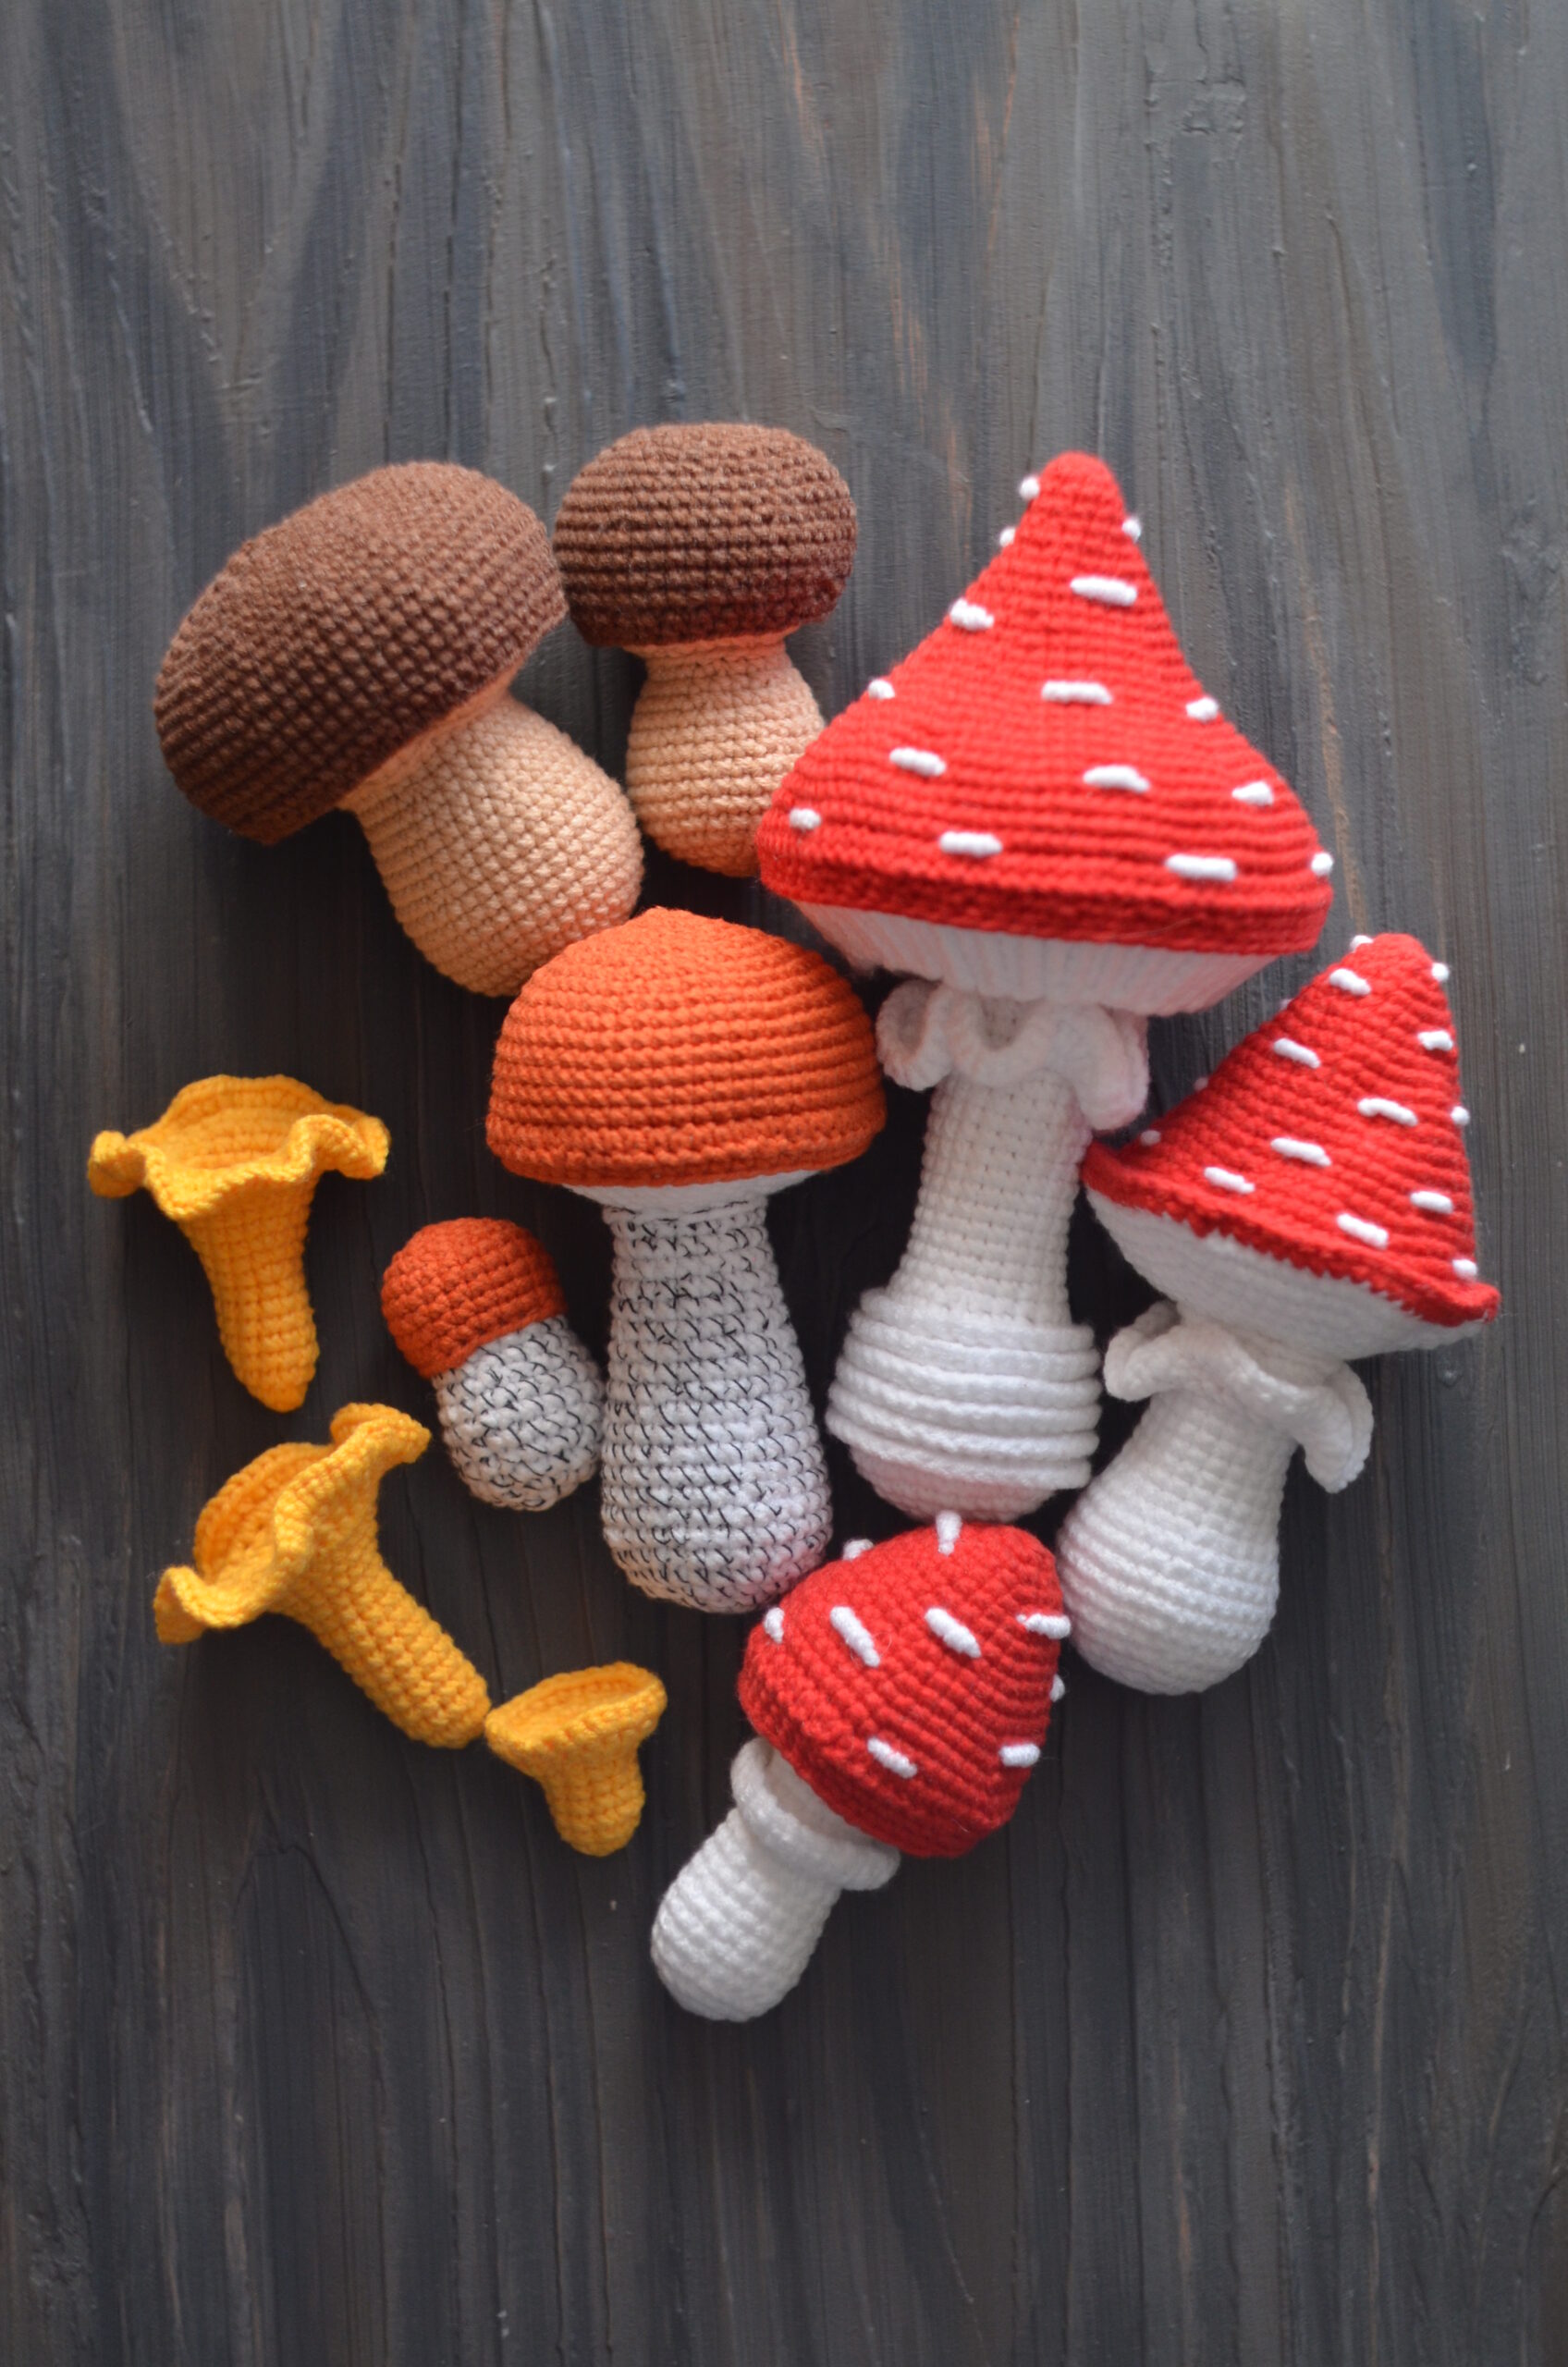 Free Crochet Mushroom Pattern - The Friendly Red Fox